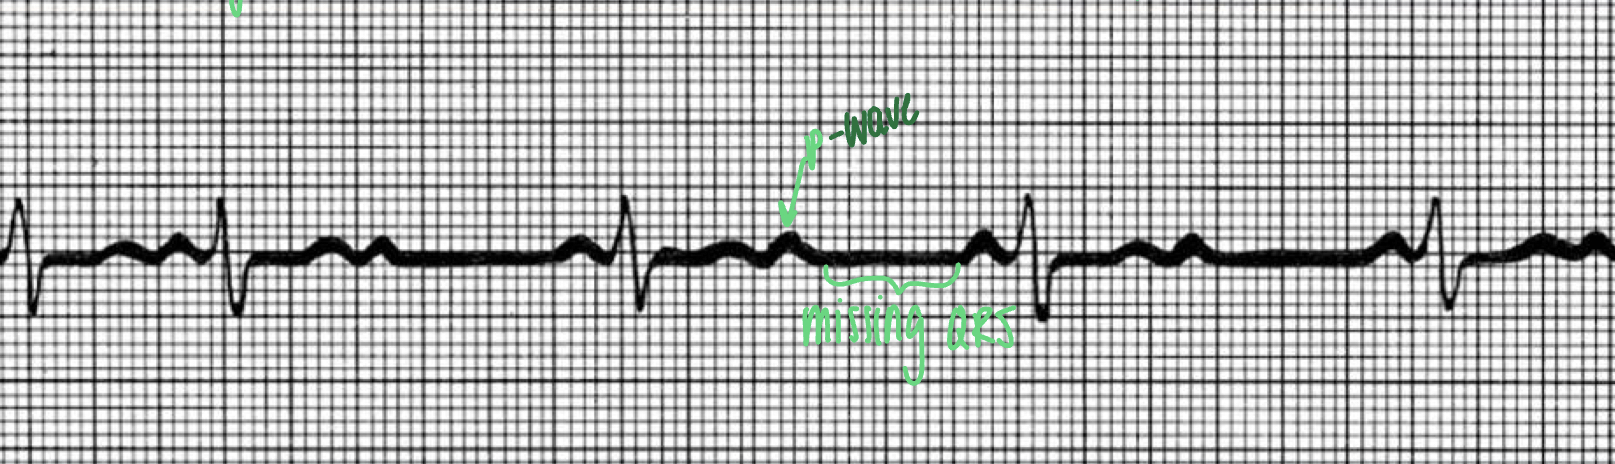 <ul><li><p>more P waves than QRS waves; missing QRS waves</p></li><li><p>&quot;second degree heart block&quot;</p></li></ul>